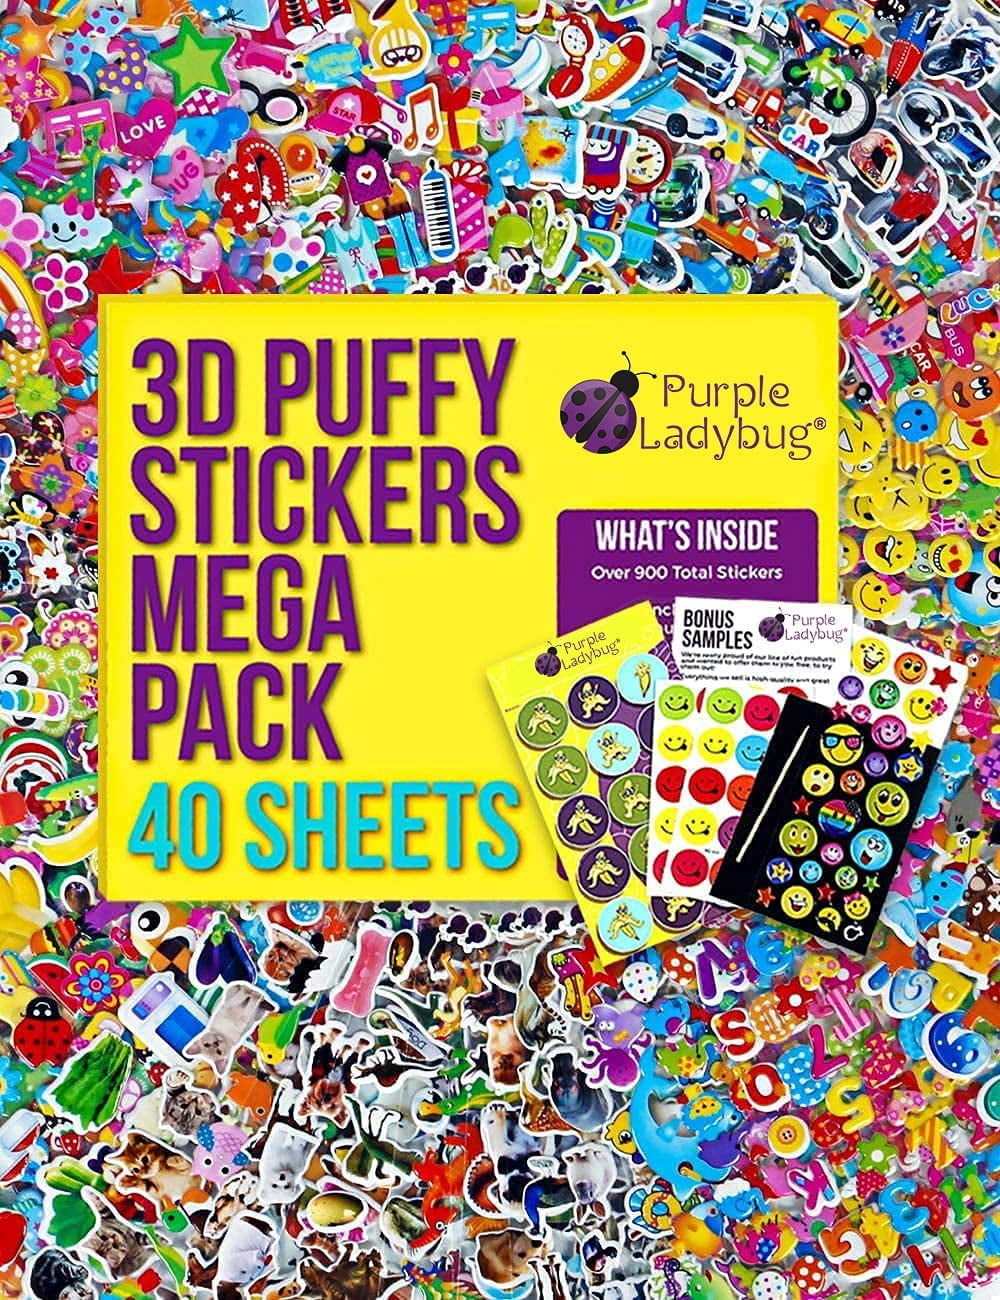 3D Stickers 8 Sheet Pack For Kids Educational Puffy Bulk Various Sticker set 